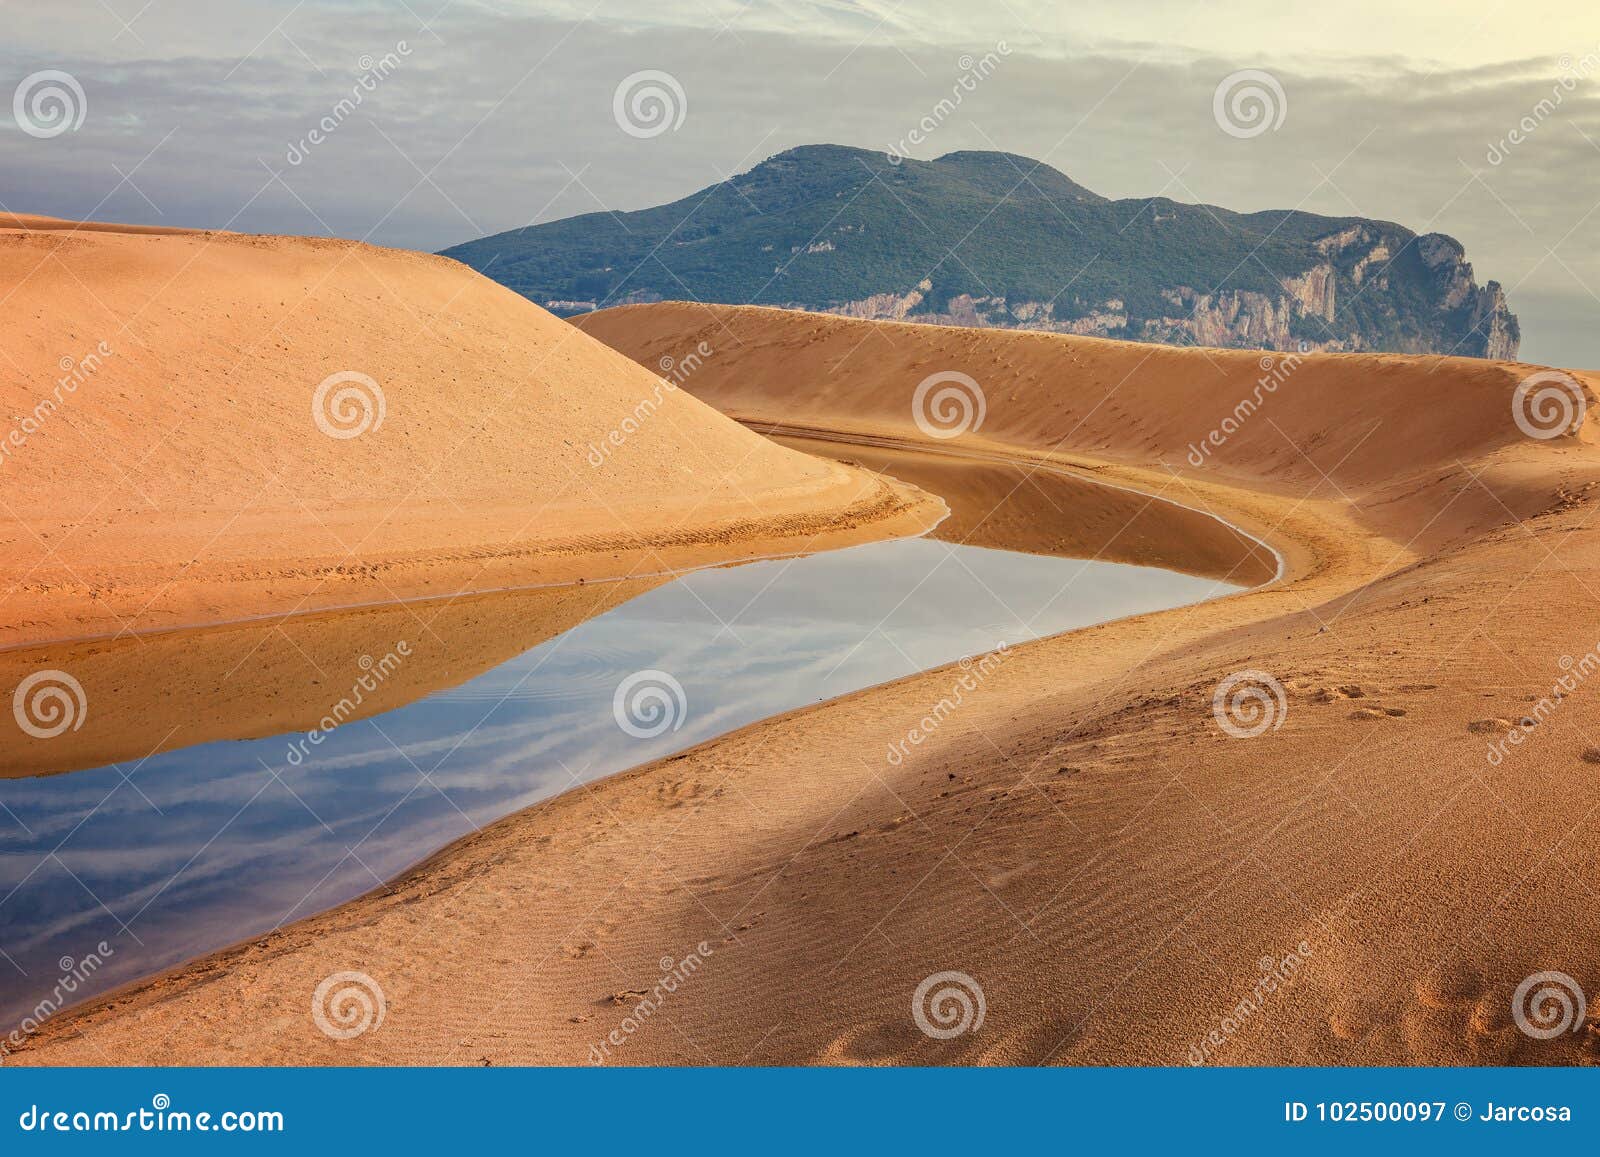 mantilla river flows into the sea between dunes in laredo, cantabria, spain